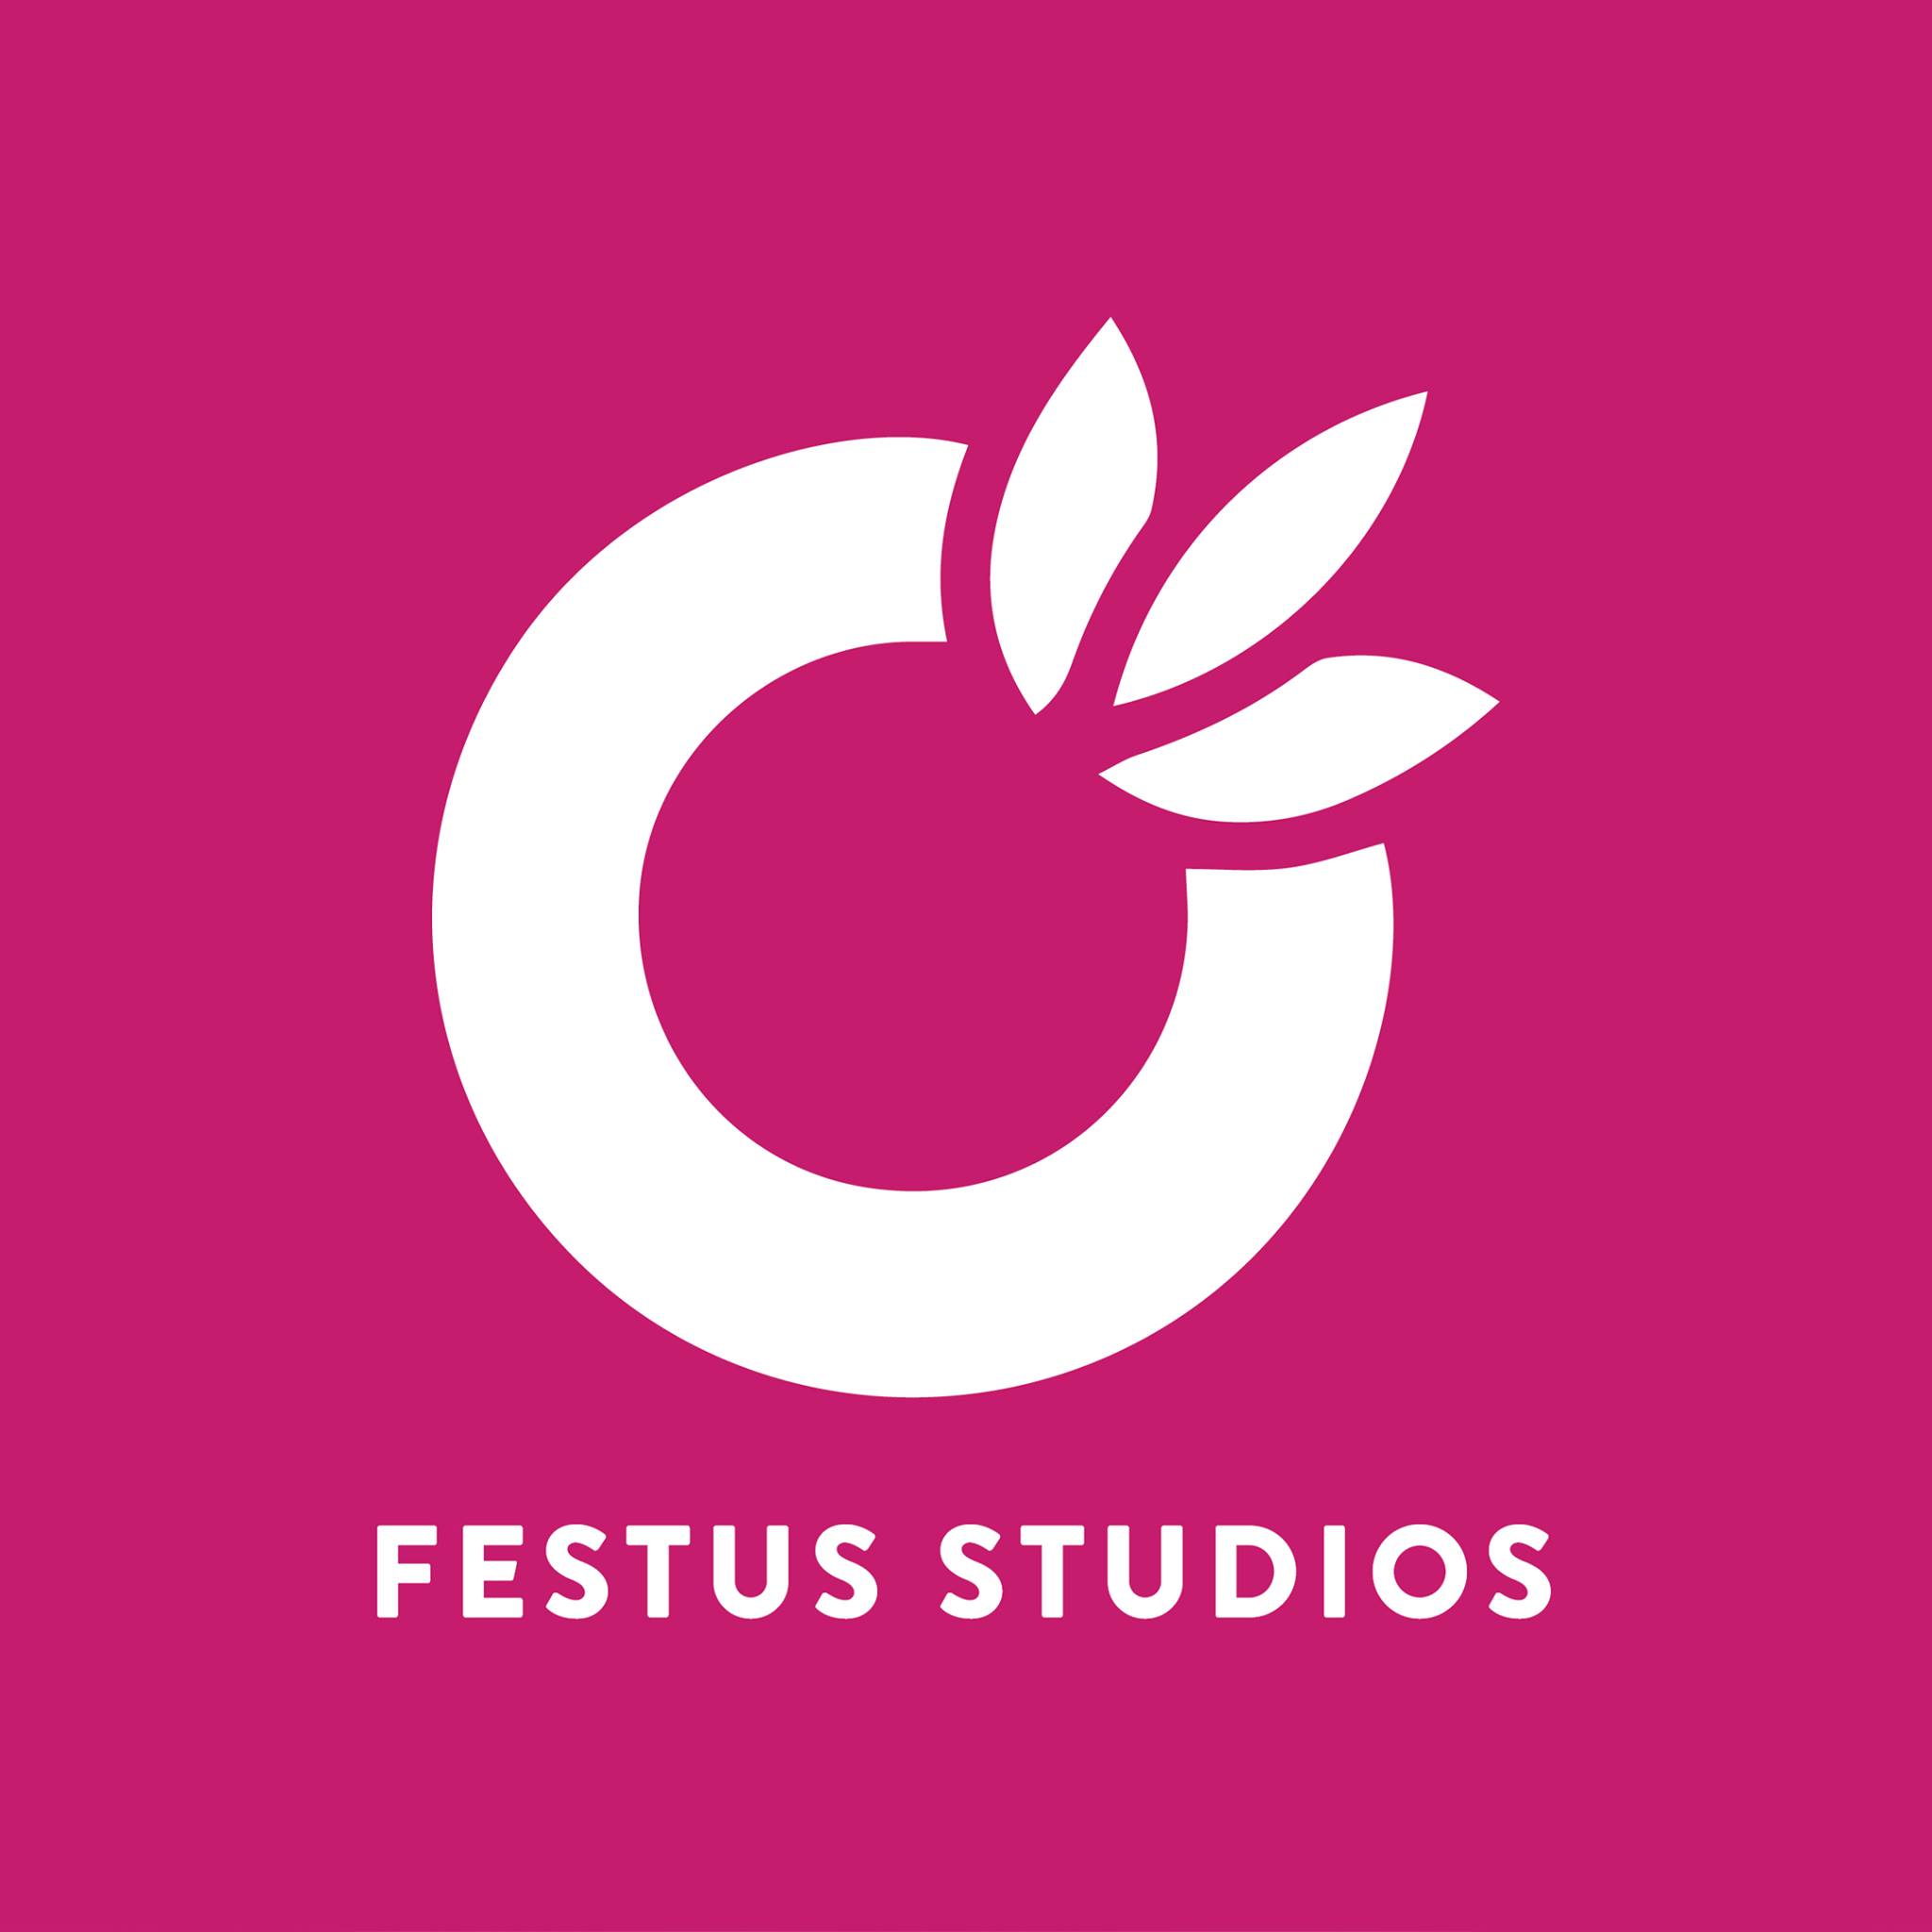 Festus Studios|Wedding Planner|Event Services